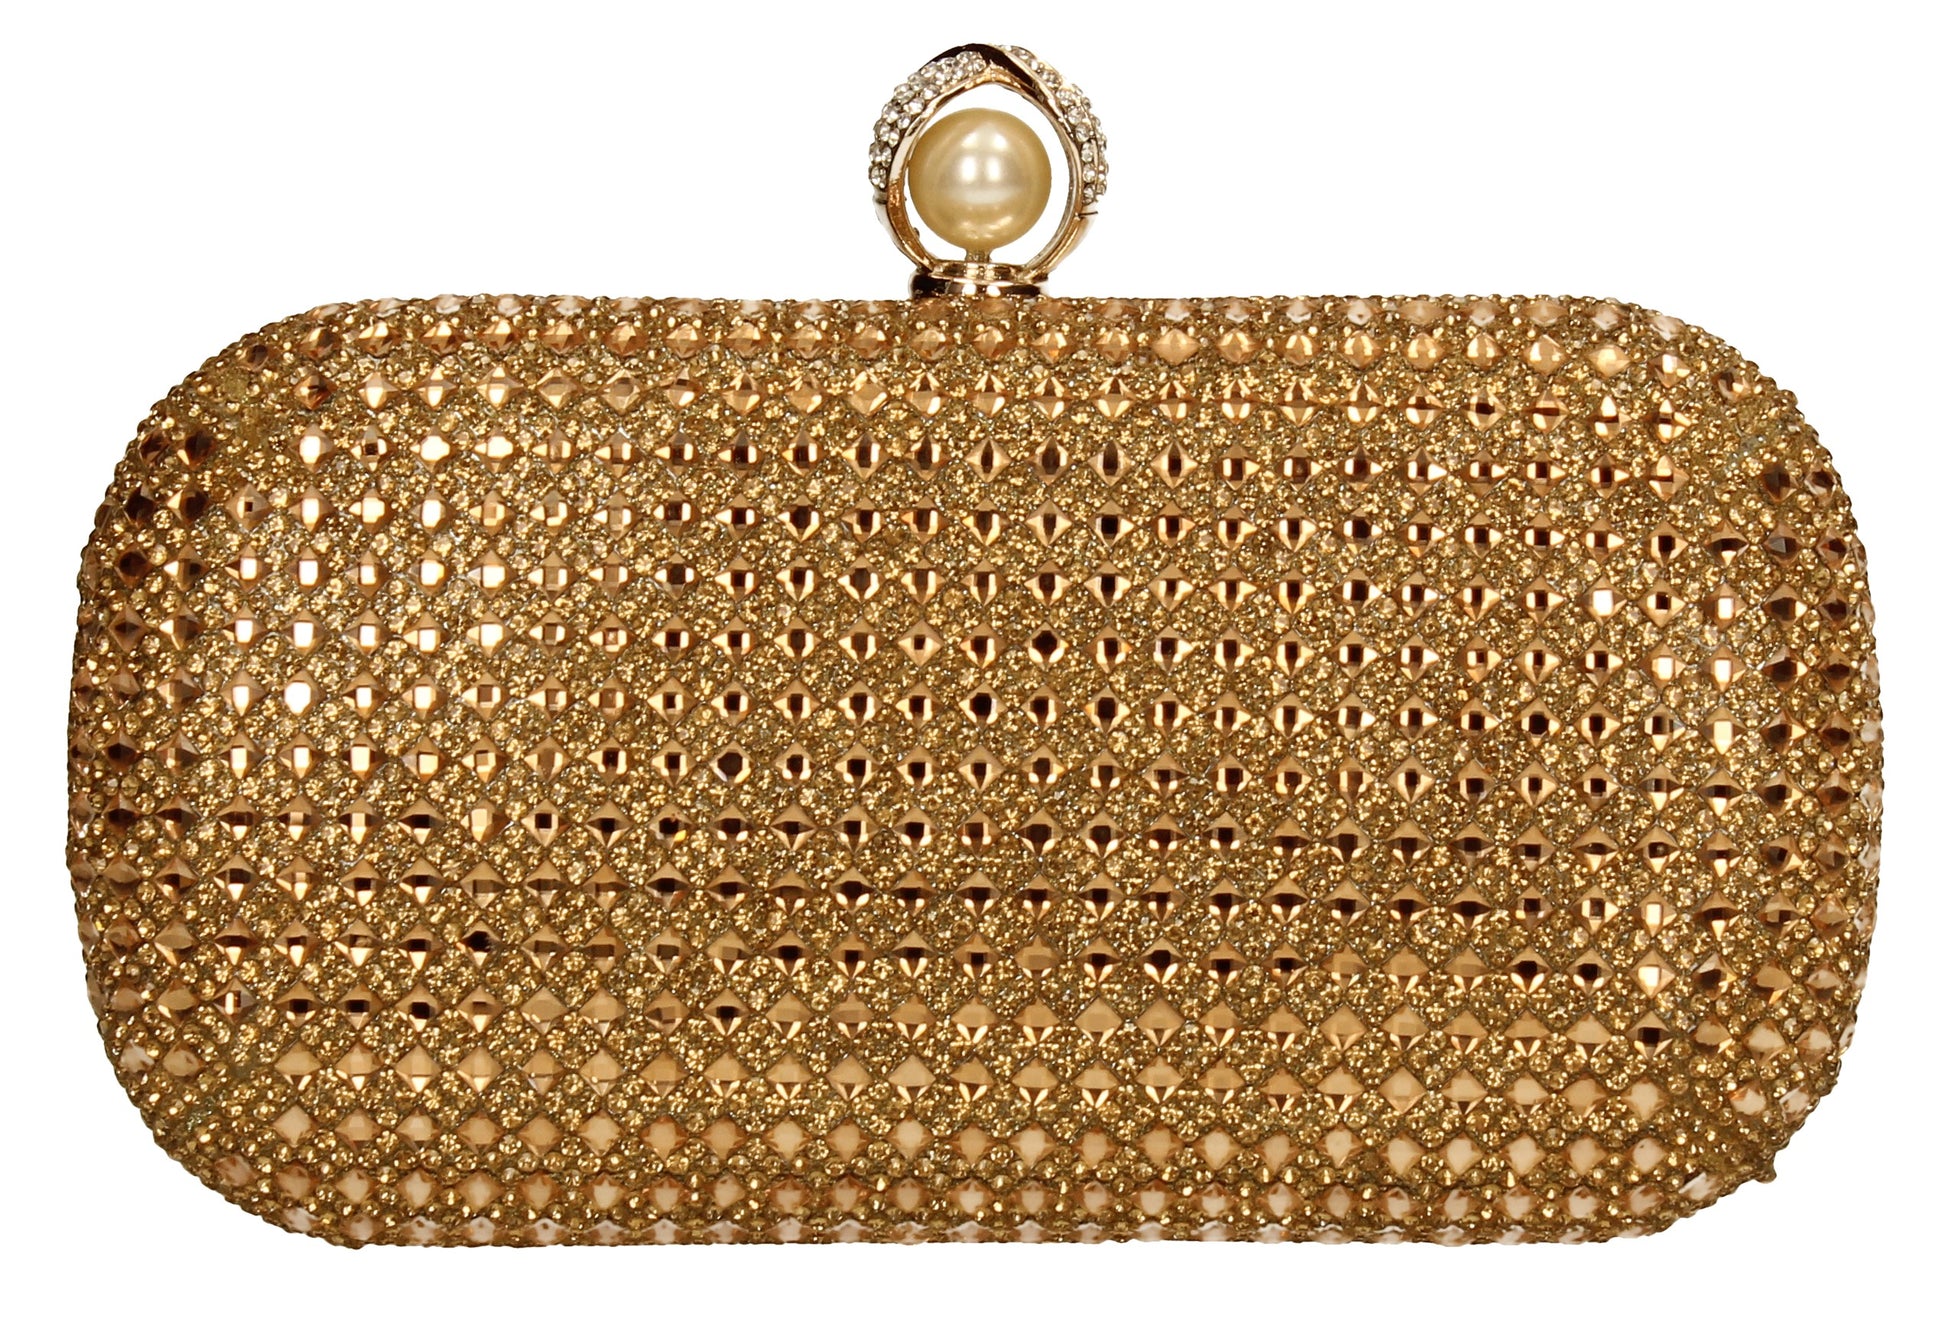 SWANKYSWANS Elsie Diamante Clutch Bag Gold Cute Cheap Clutch Bag For Weddings School and Work